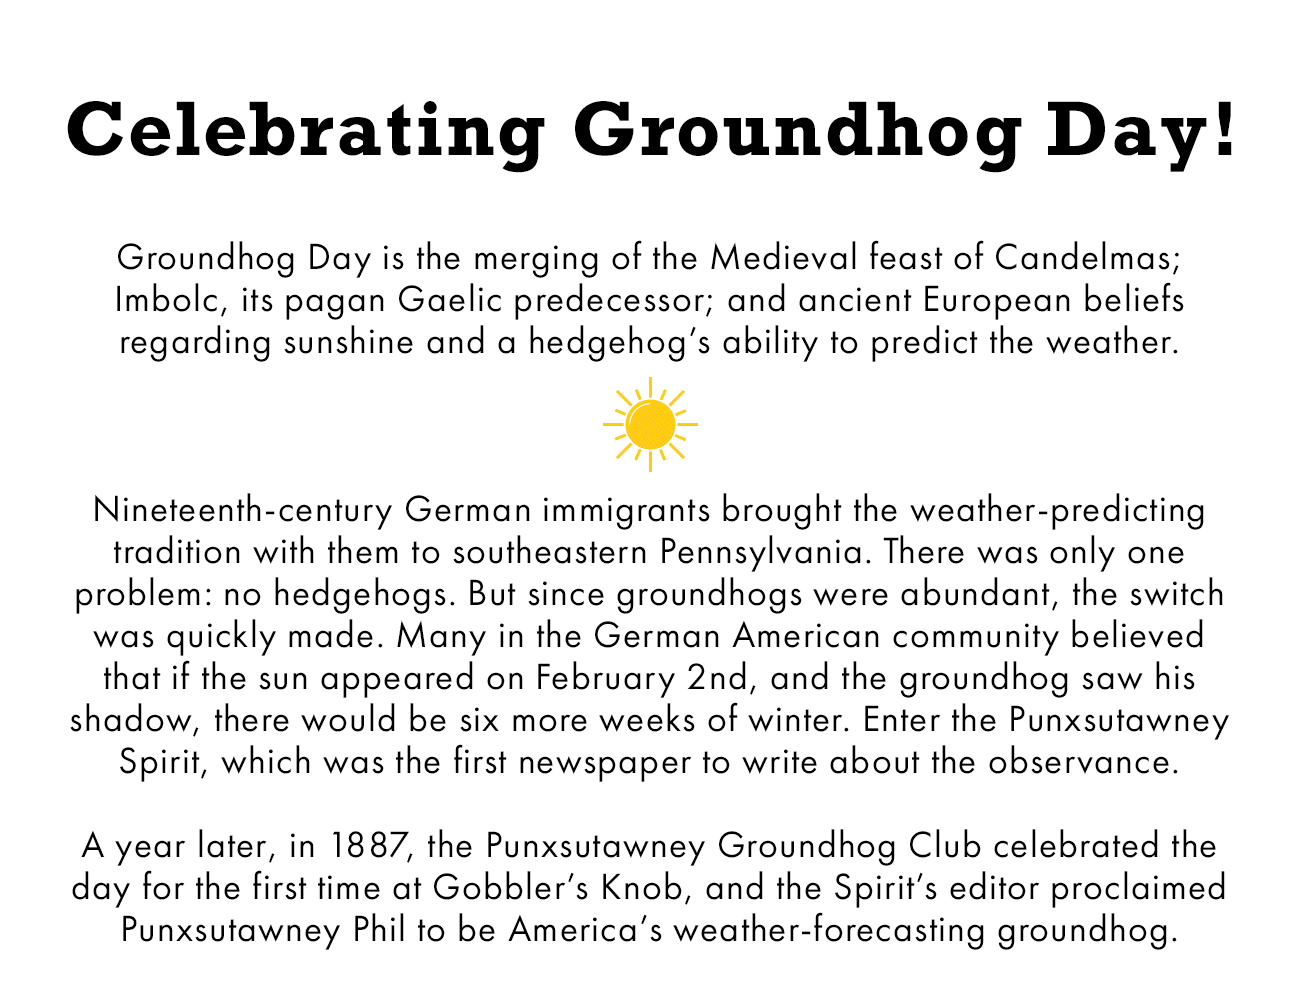 Celebrating Groundhod Day